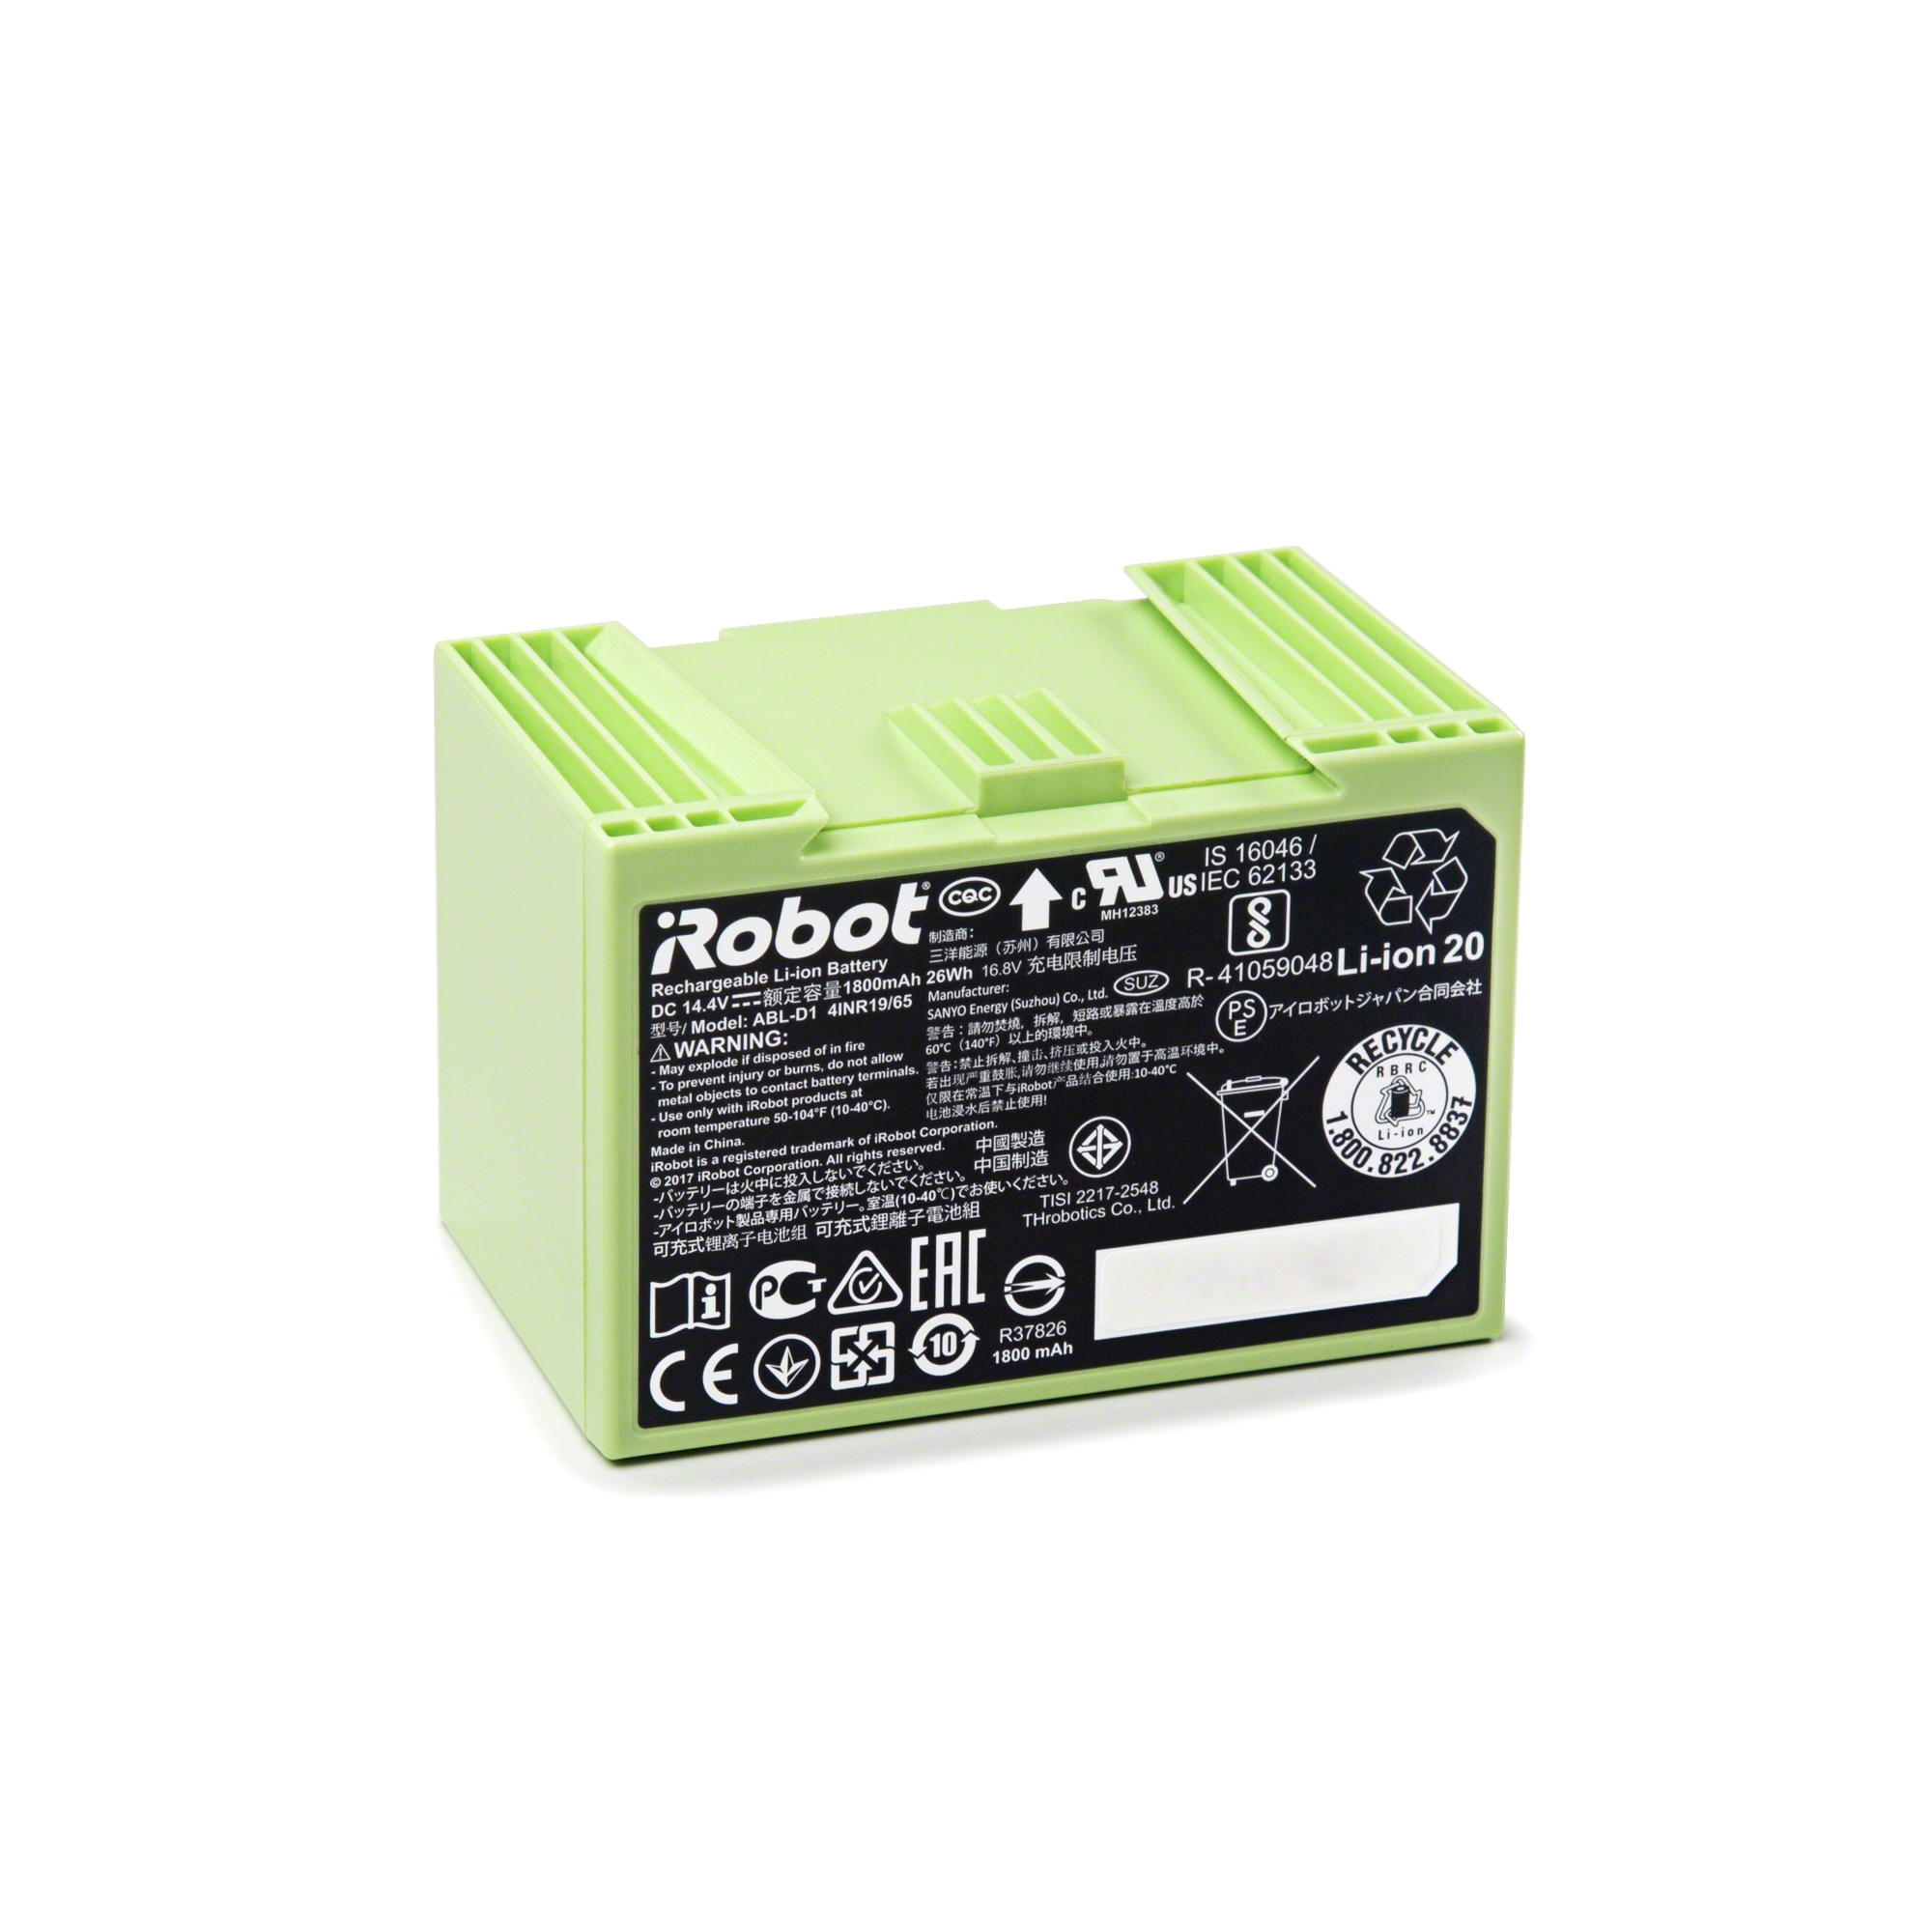 FirstPower Kit de Accesorios de Repuesto, Compatible con iRobot